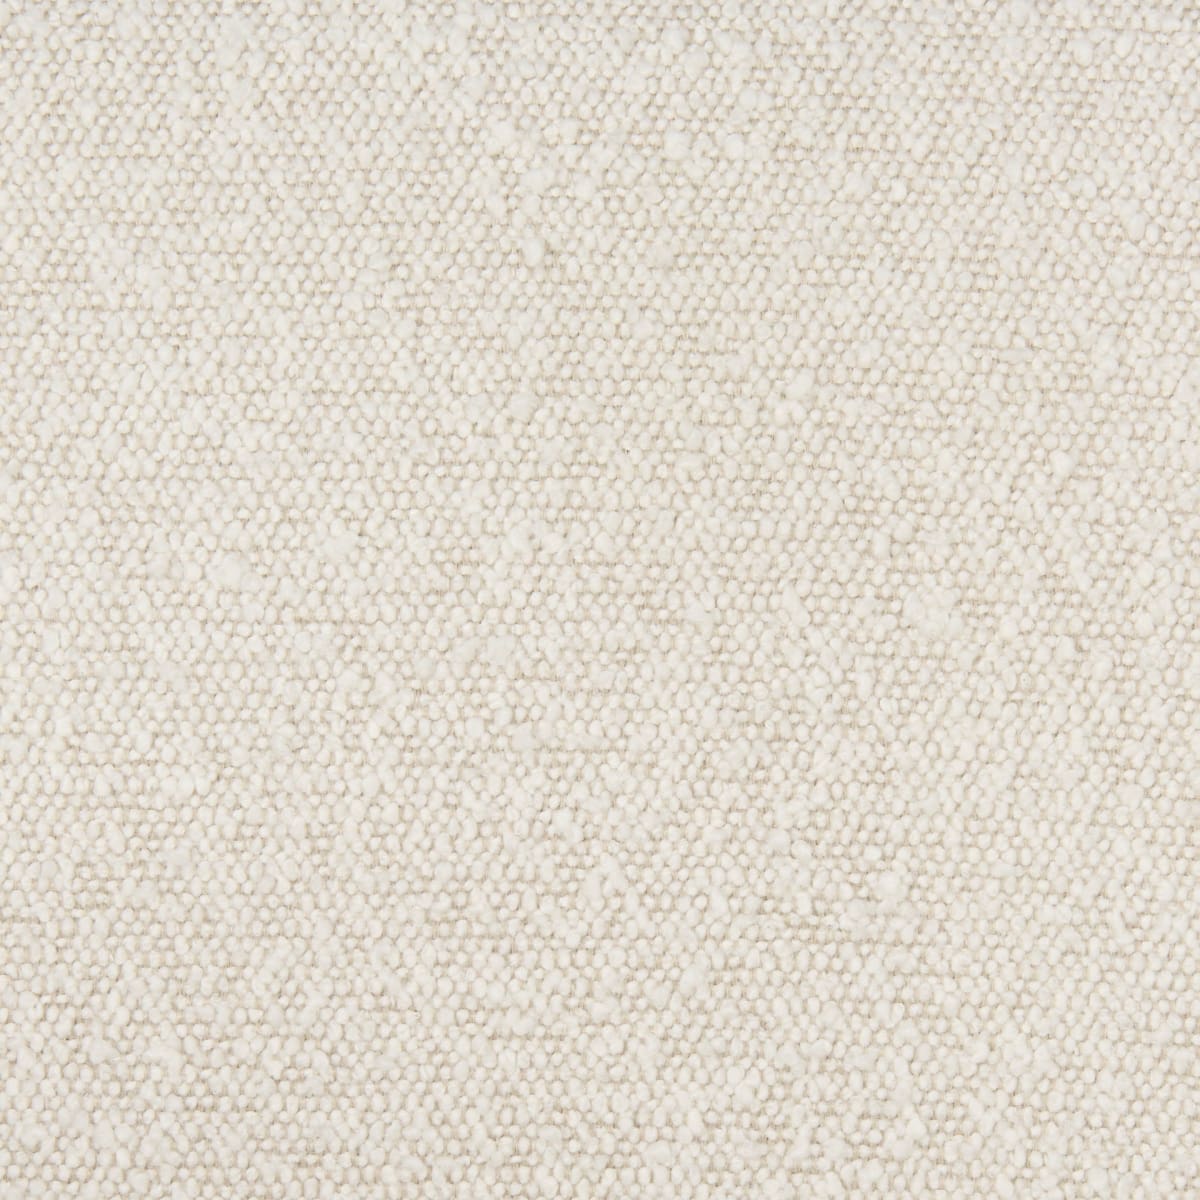 Ashton Accent Chair Cream Bouclé Fabric | Medium Brown Wood - accent-chairs